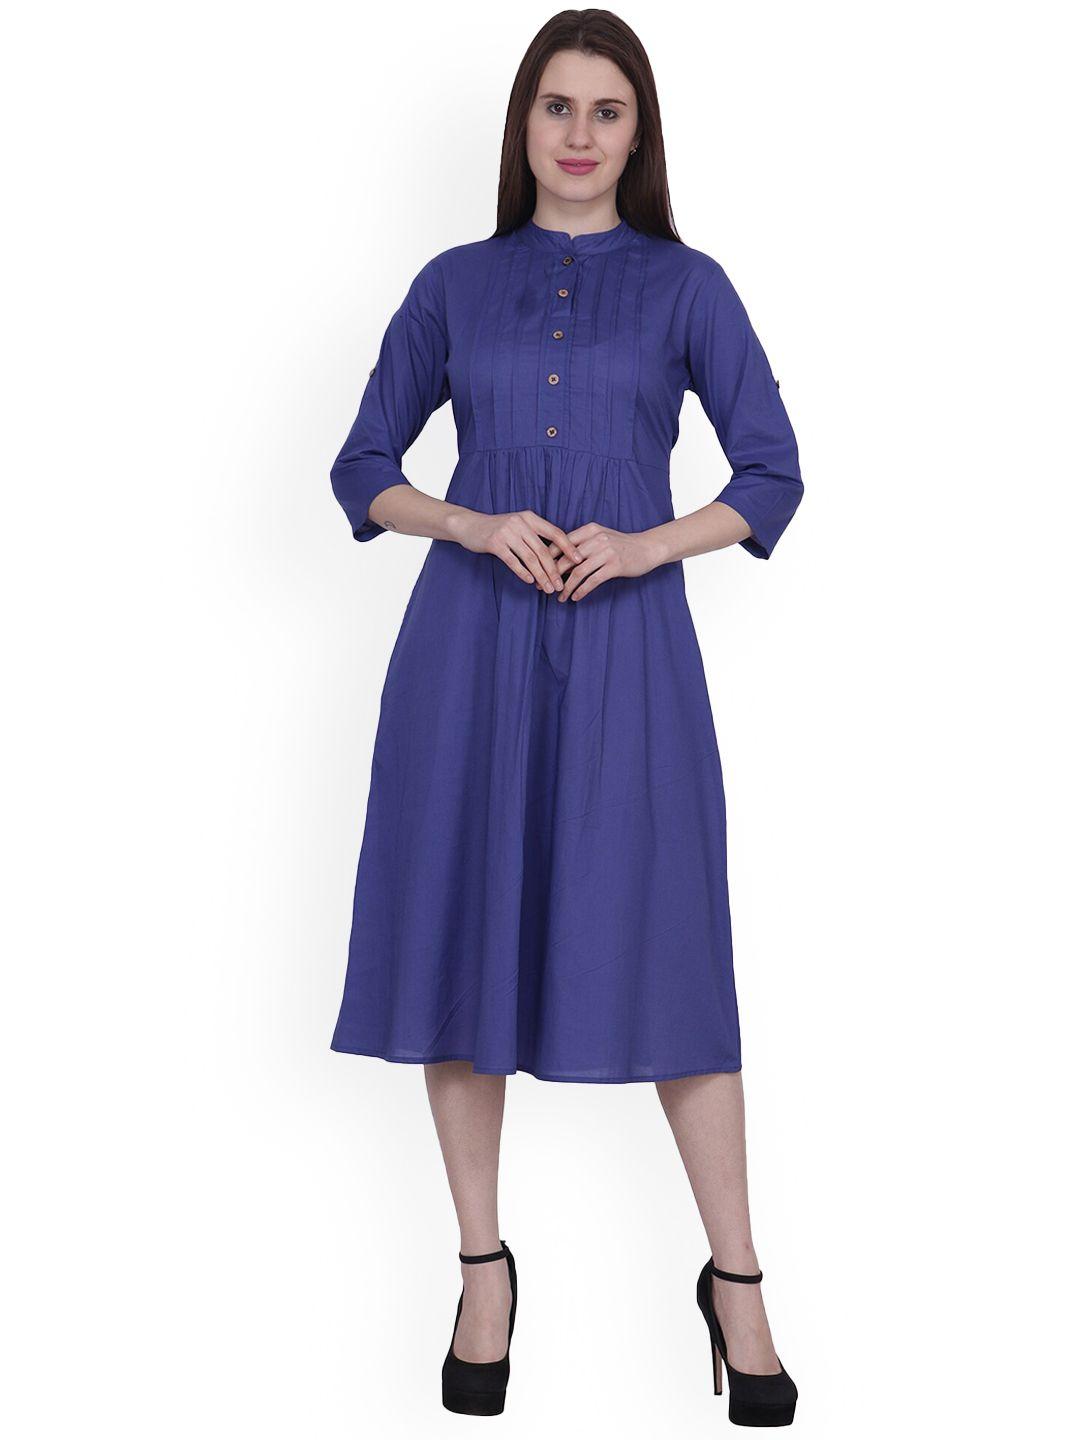 frempy women navy blue cotton a-line dress